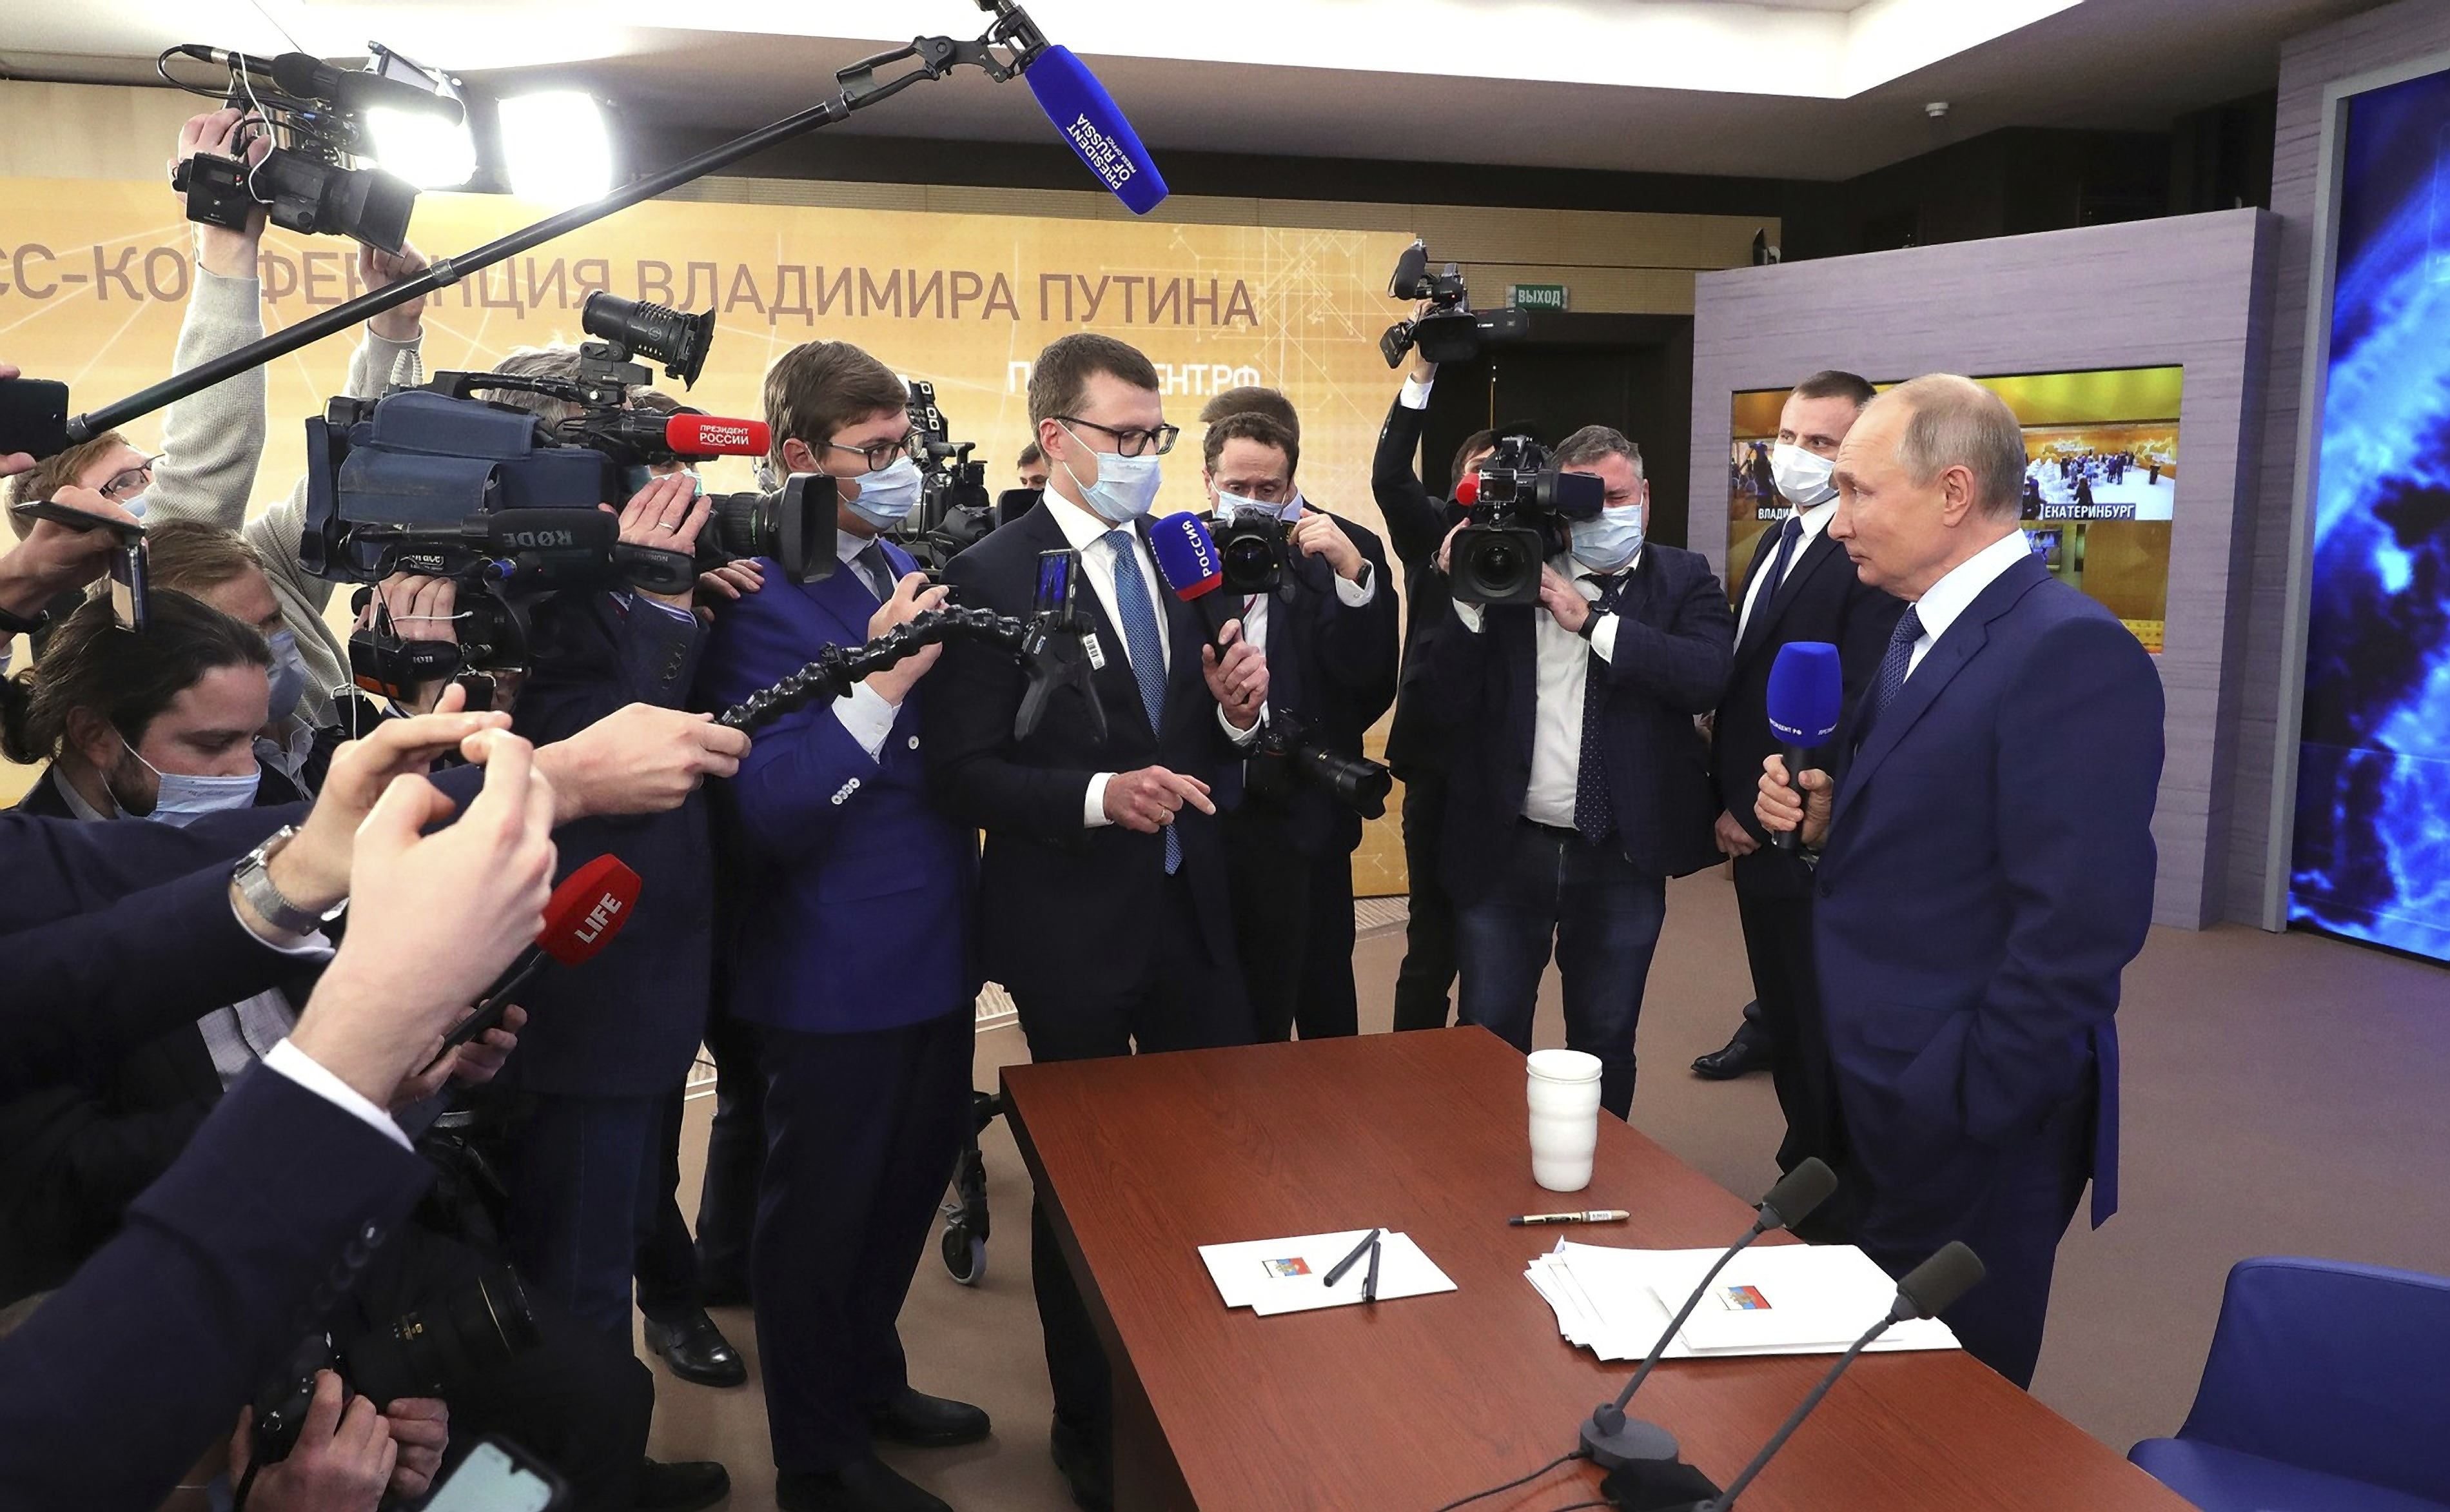 Russia: Reporters gather around Russian President Vladimir Putin